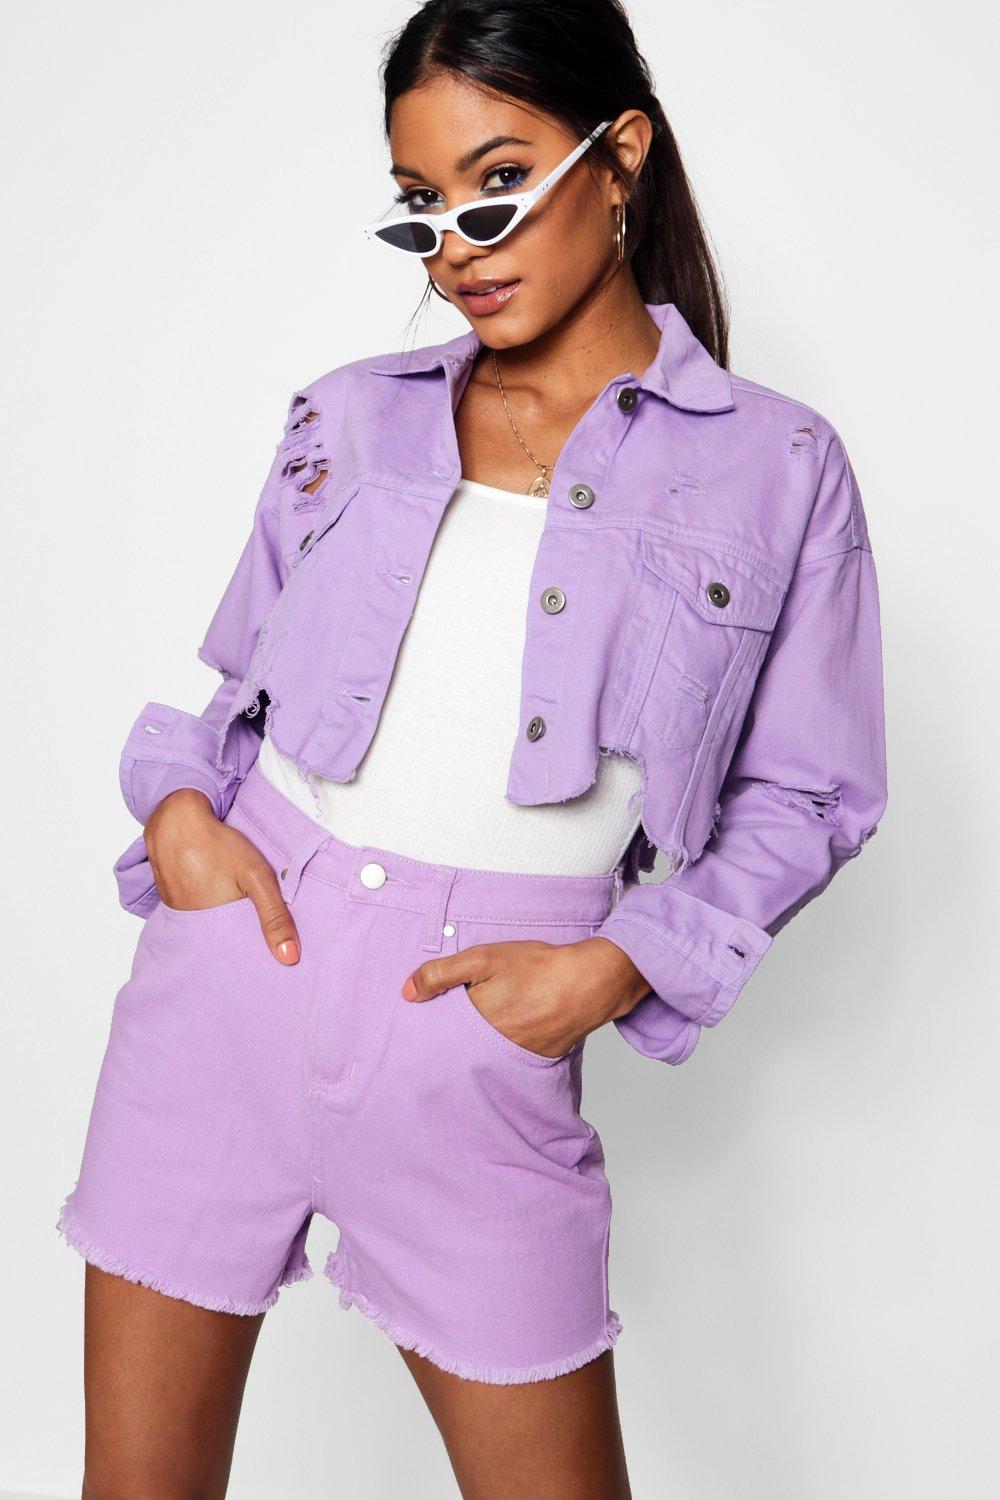 lavender jean jacket